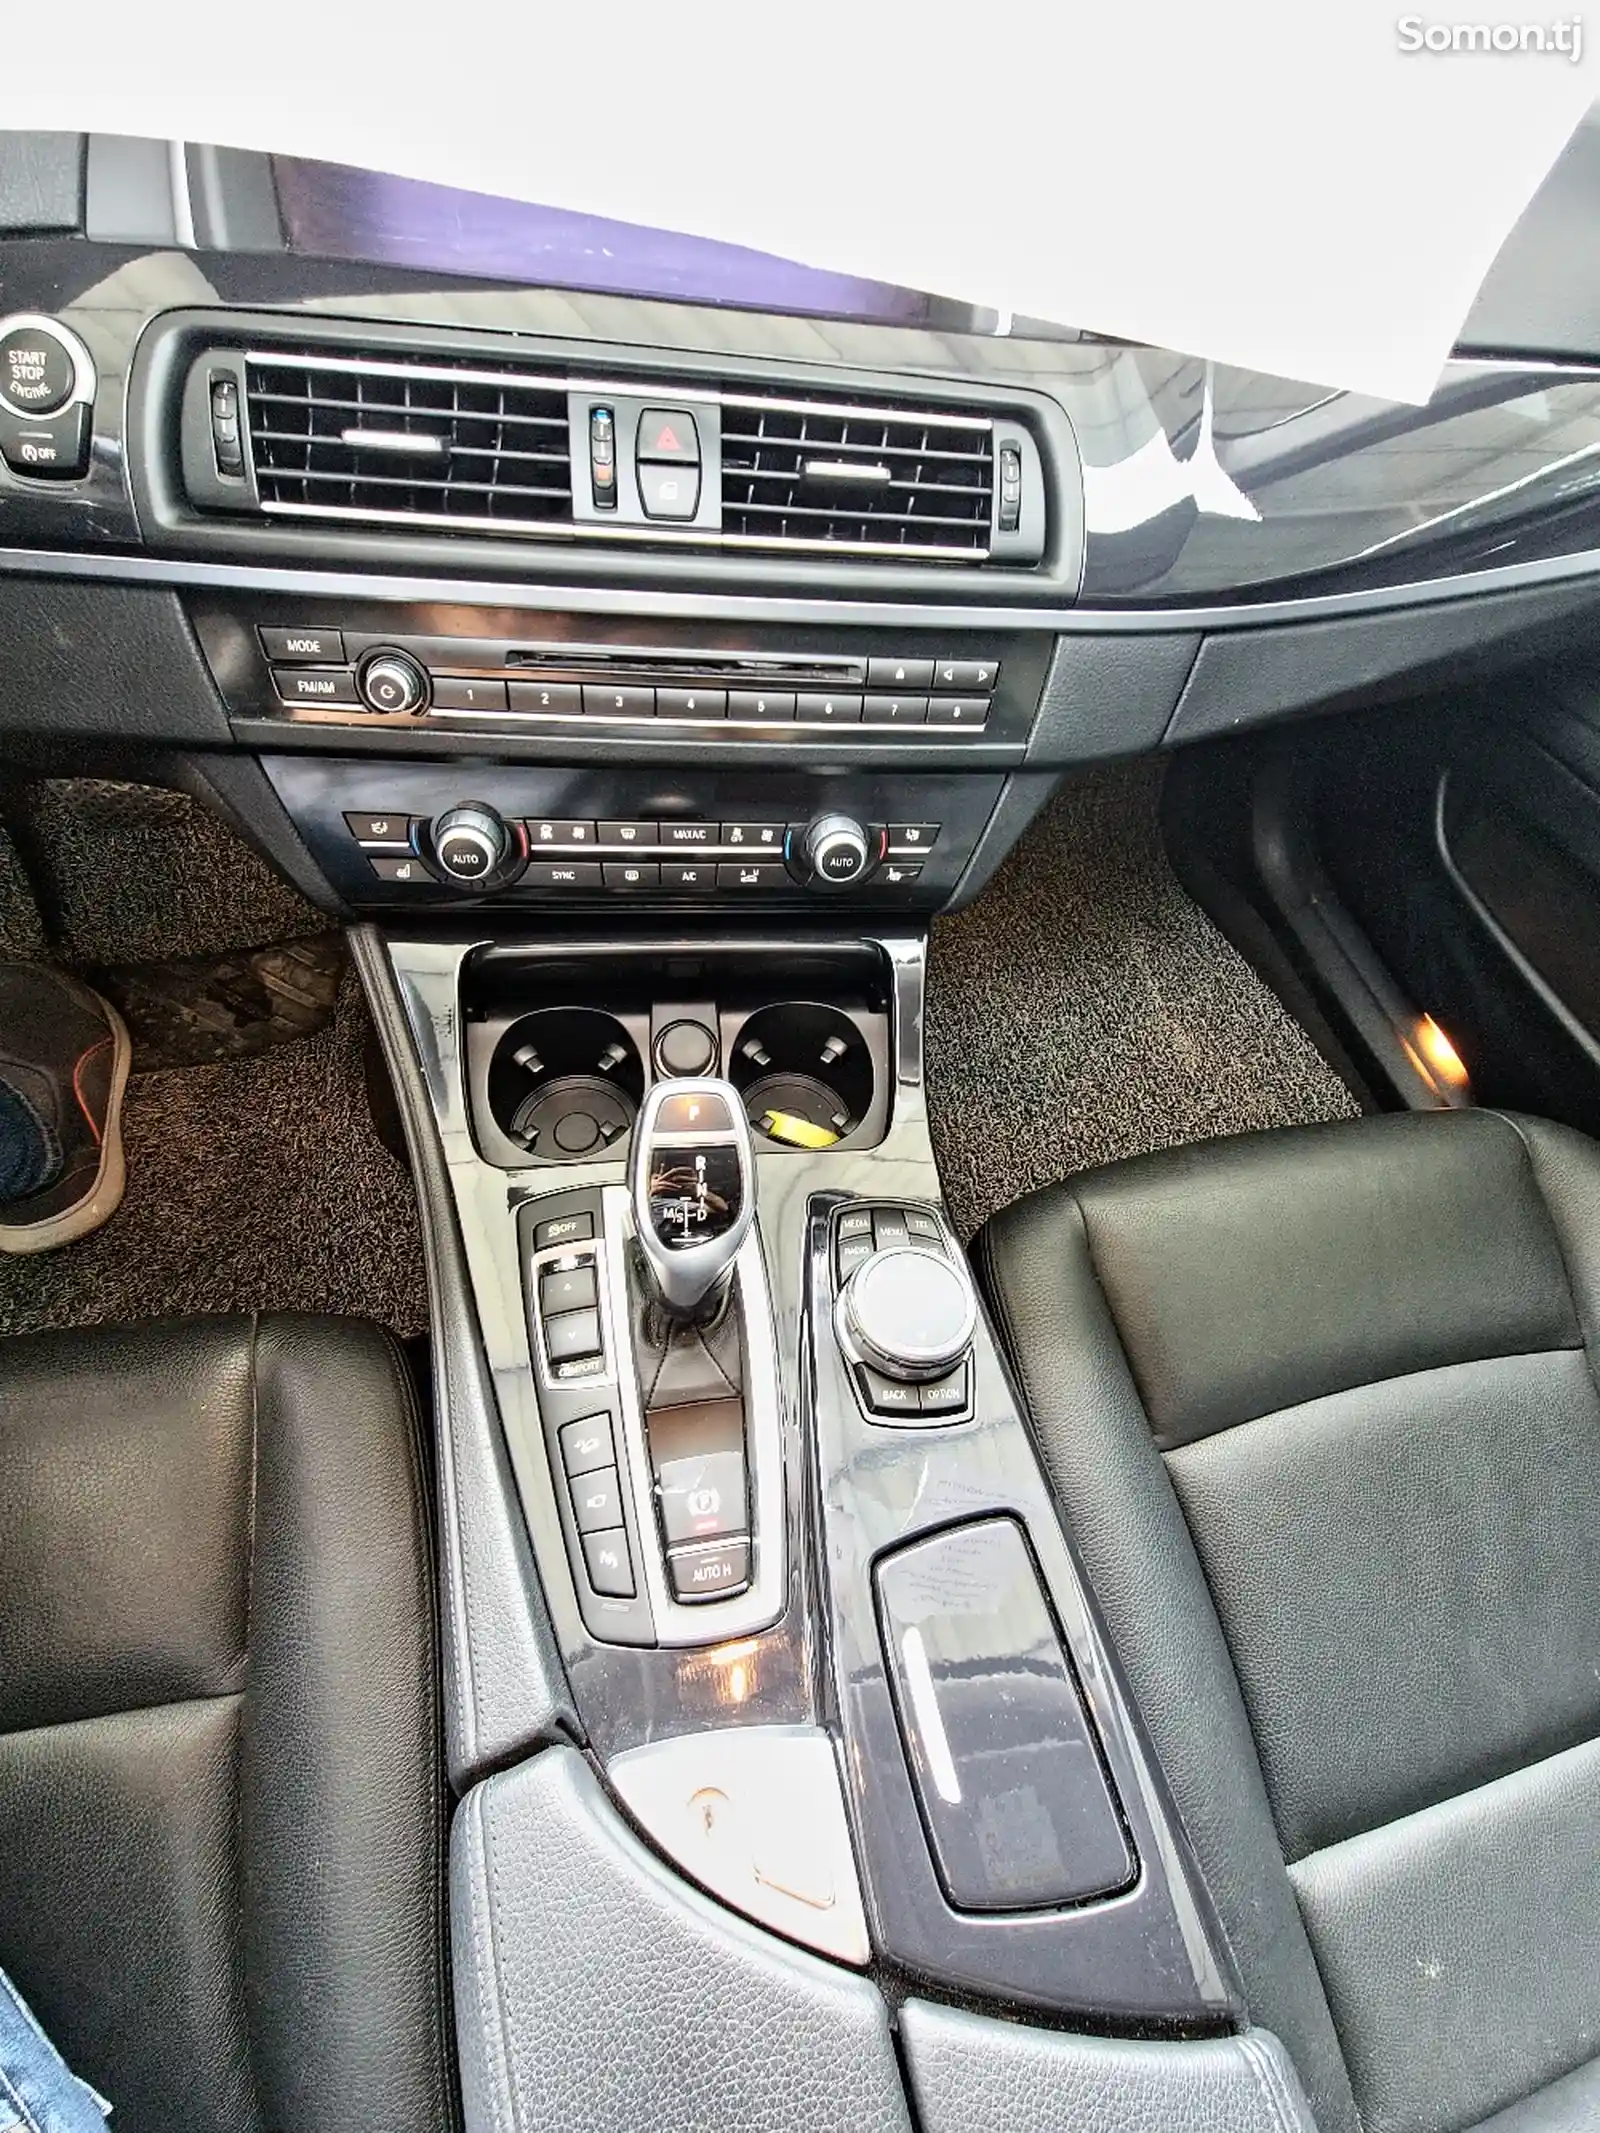 BMW 5 series, 2015-14